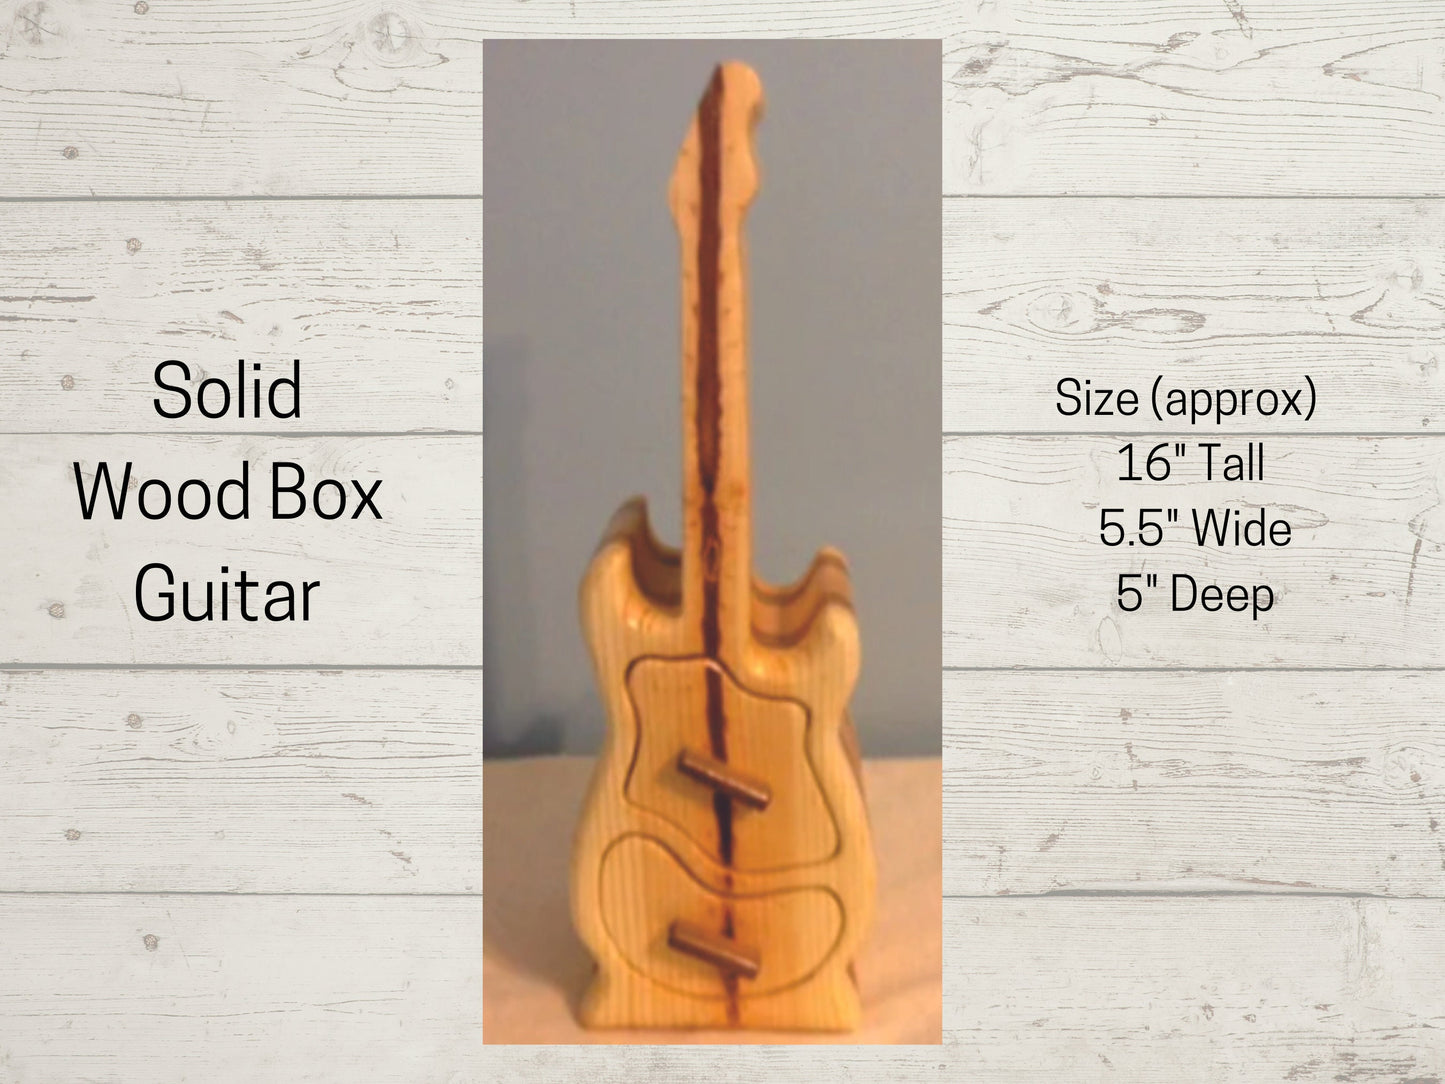 Solid Wood Box w/ Drawers - Guitar, Jewelry Box, Handcrafted, Custom Box, Personalized Box, Handmade, Box, Home Decor, Engraved, Stash Box